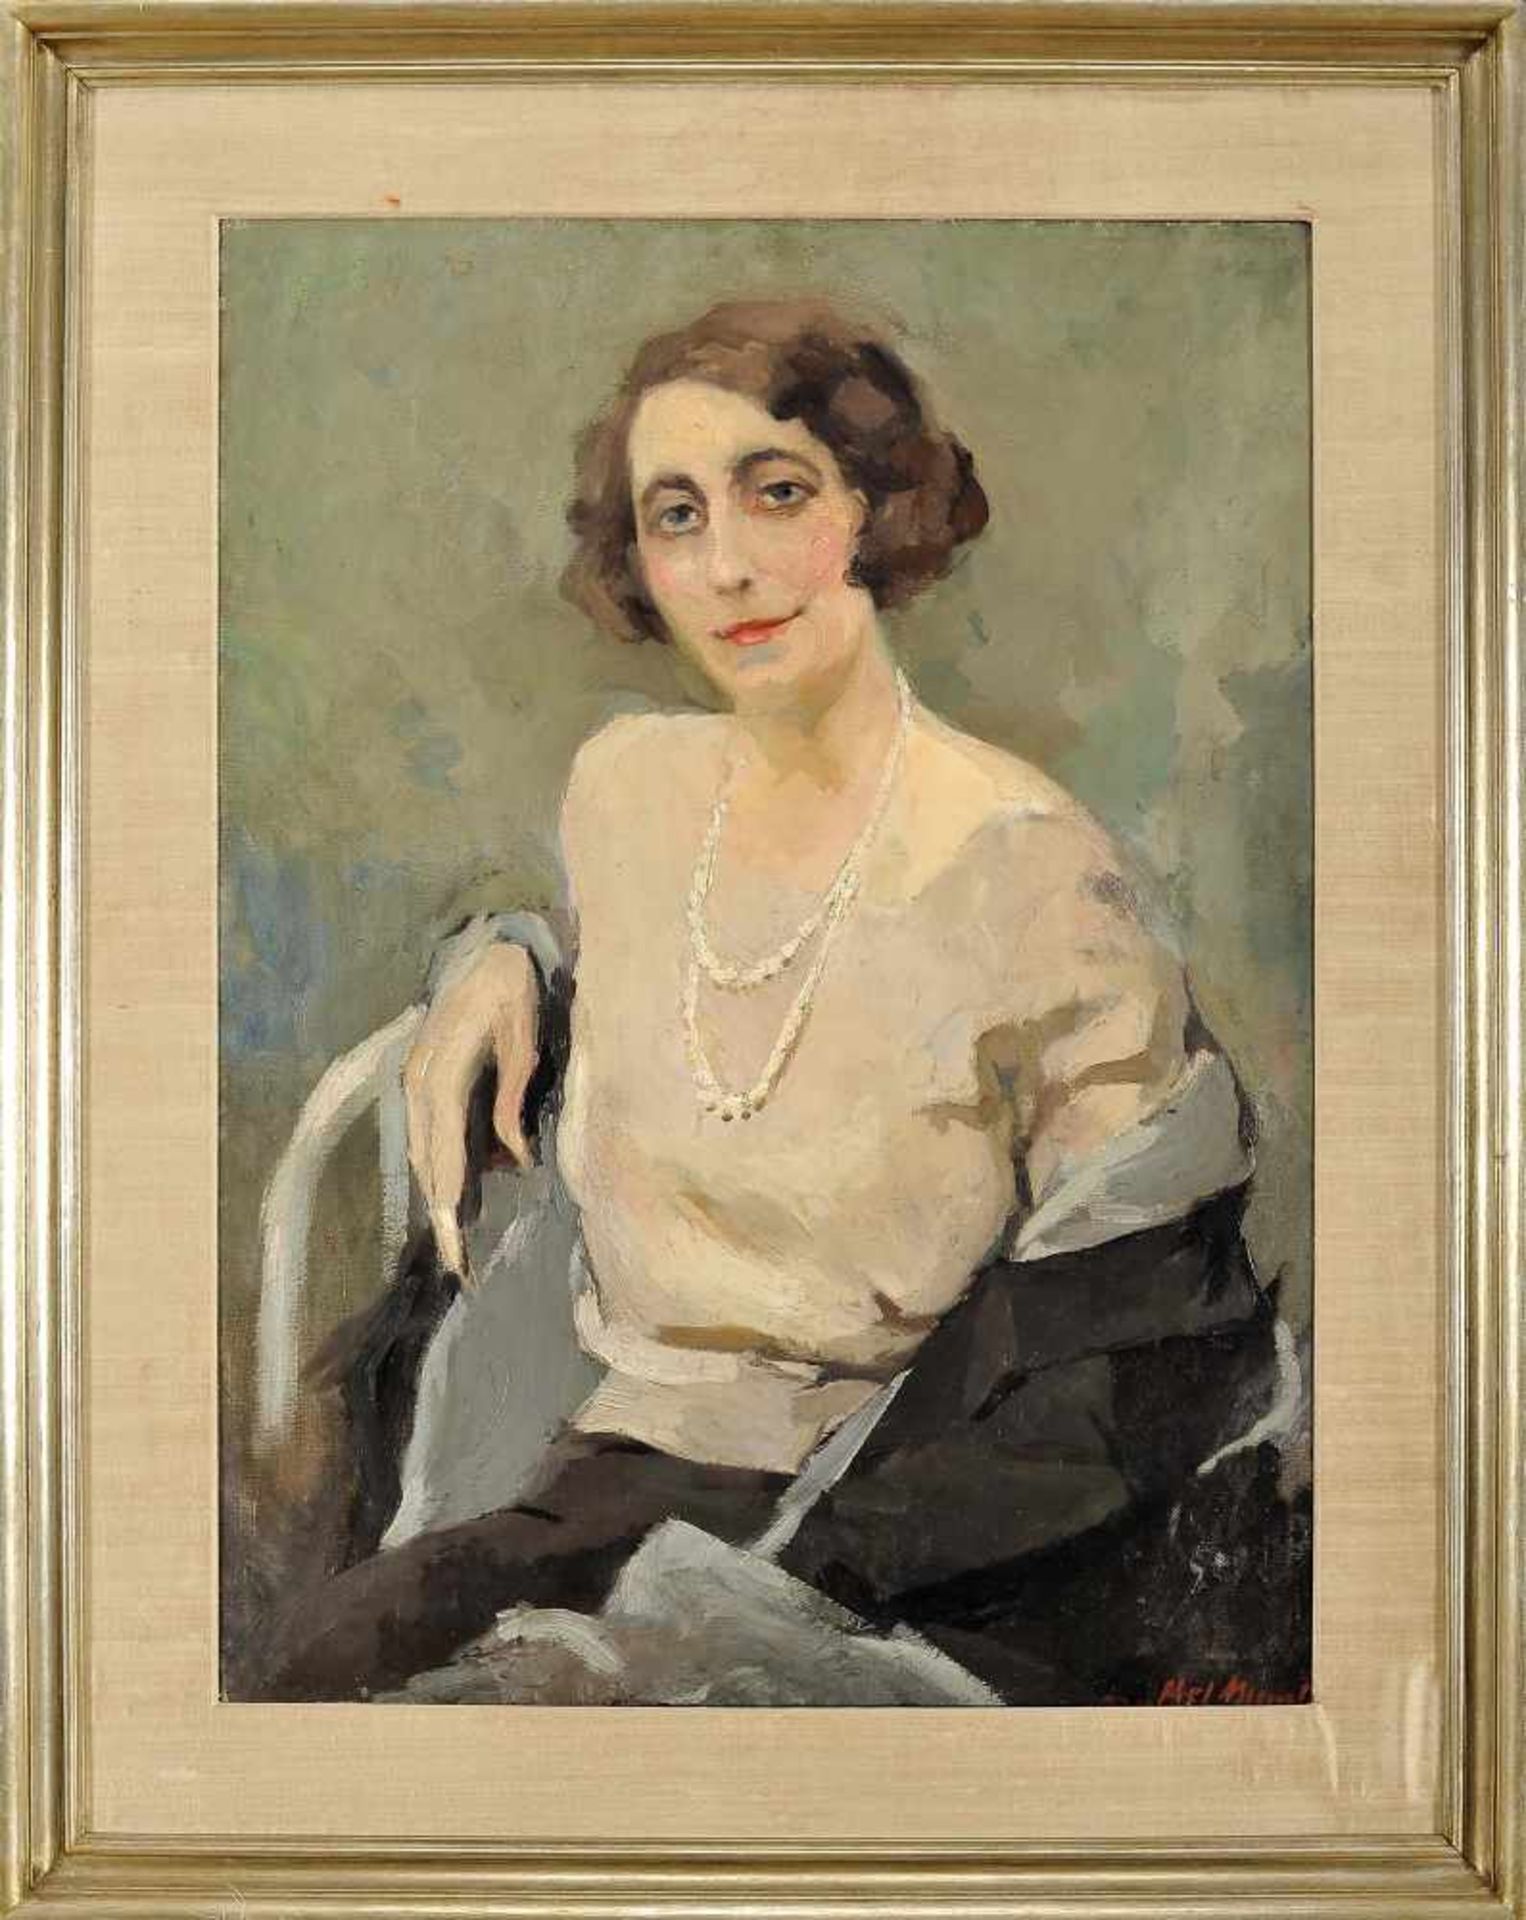 Portrait of painter Maria Adelaide de Lima Cruz